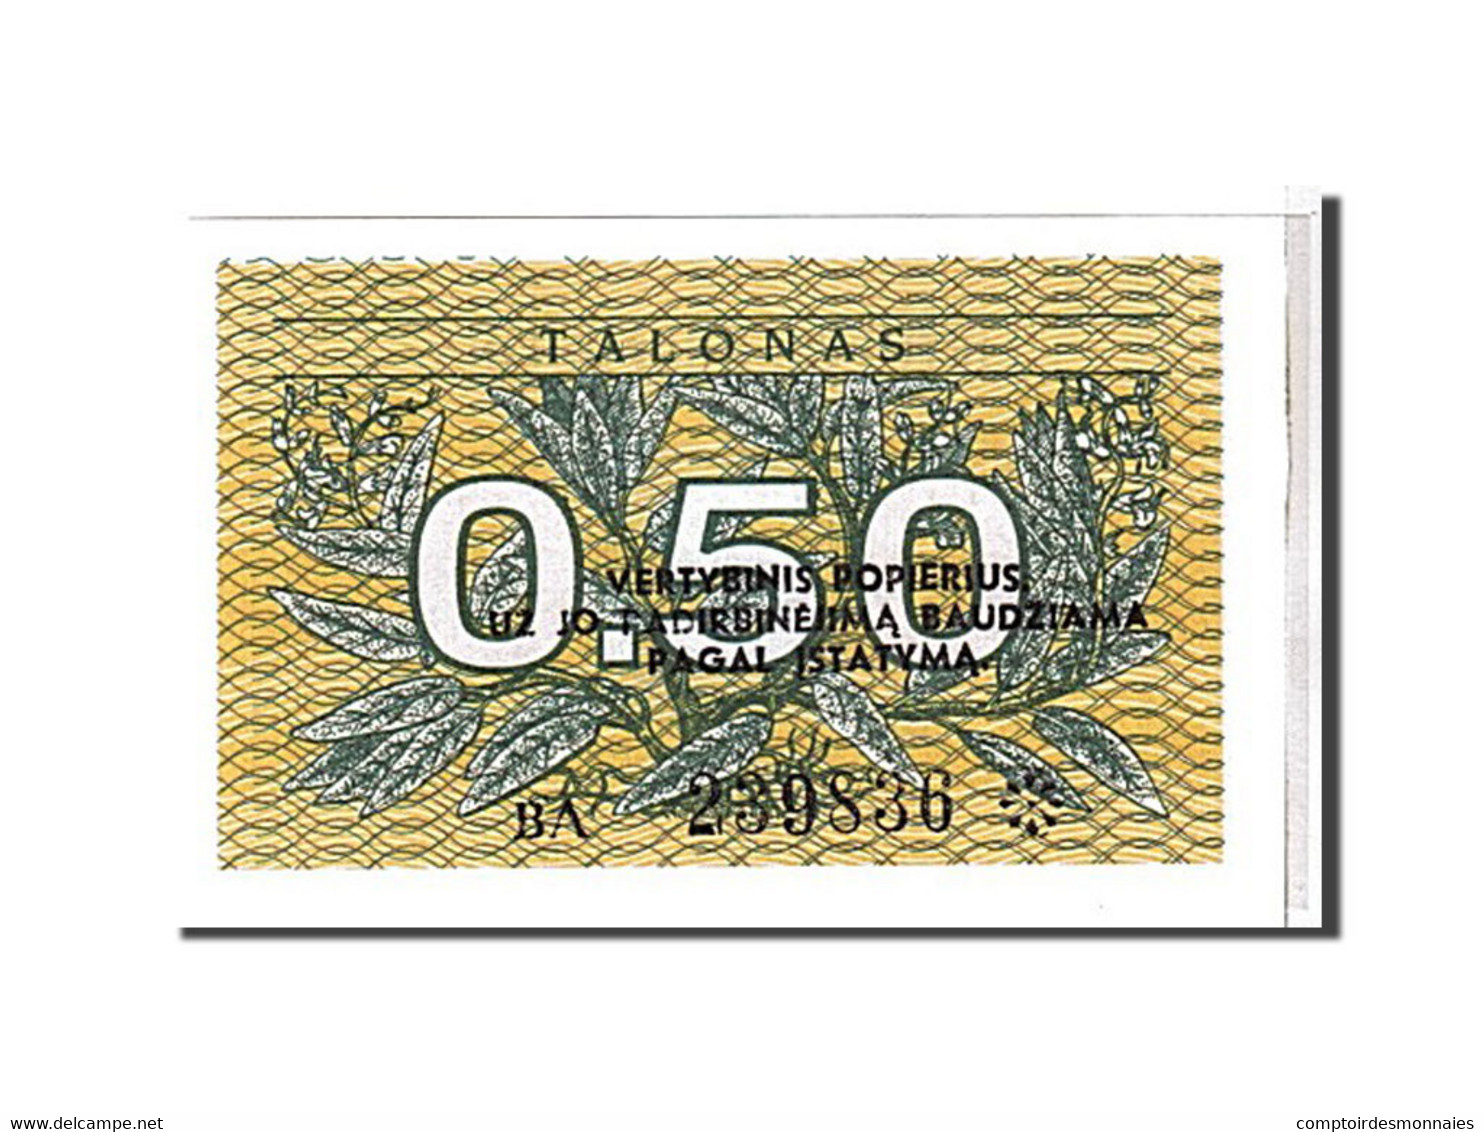 Billet, Lithuania, 0.50 Talonas, 1991, NEUF - Litauen